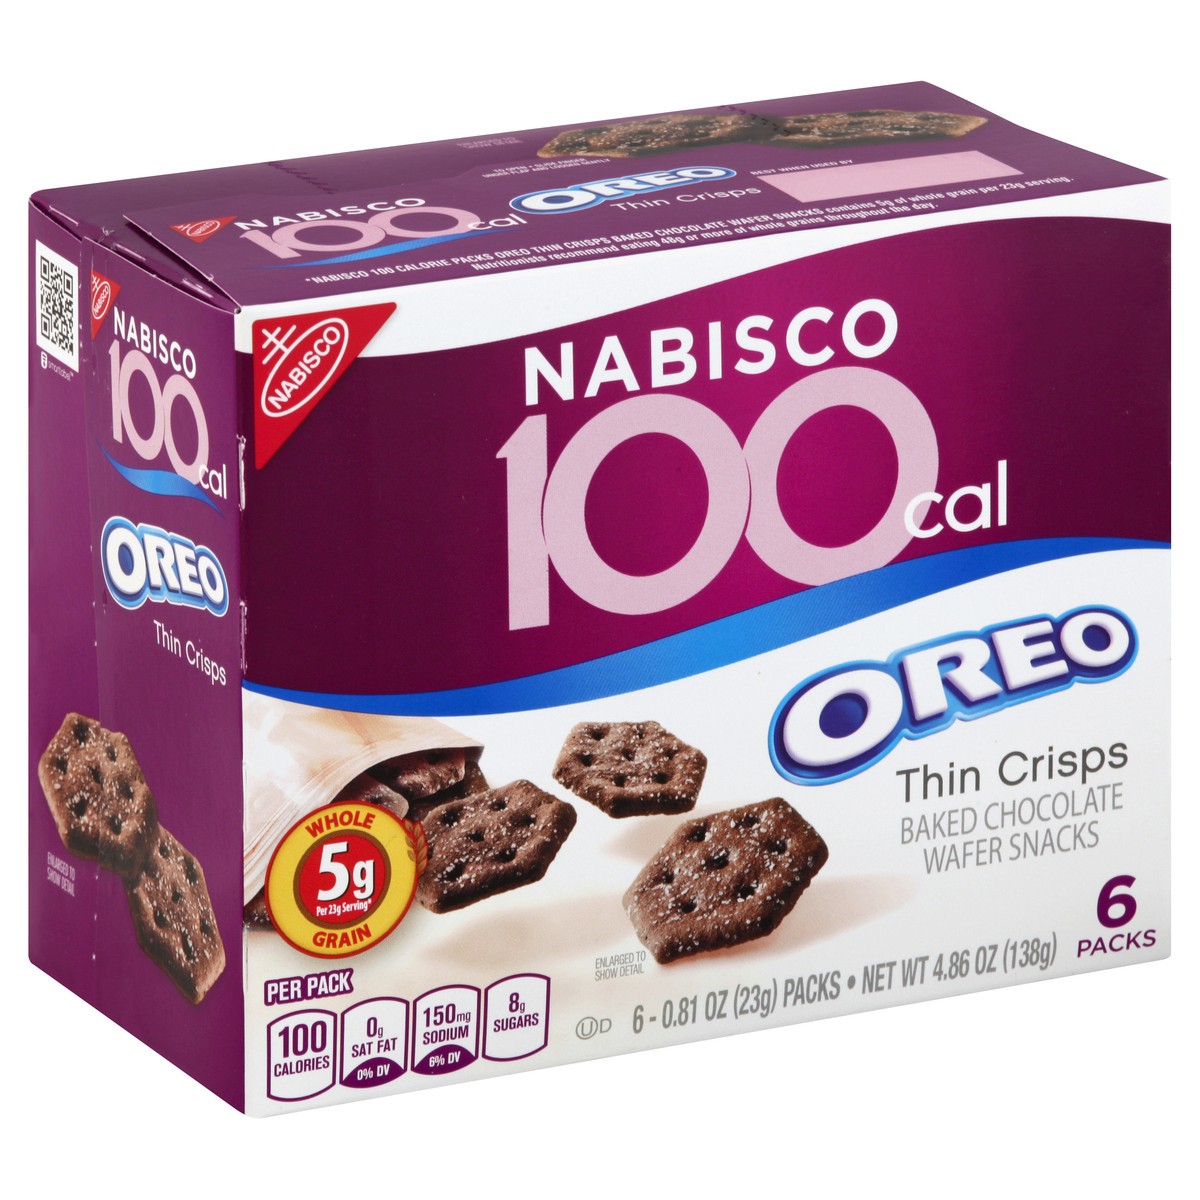 slide 5 of 5, Nabisco Oreo 100 Cal Thin Crisps Baked Chocolate Wafer Snacks, 6 ct; 0.81 oz